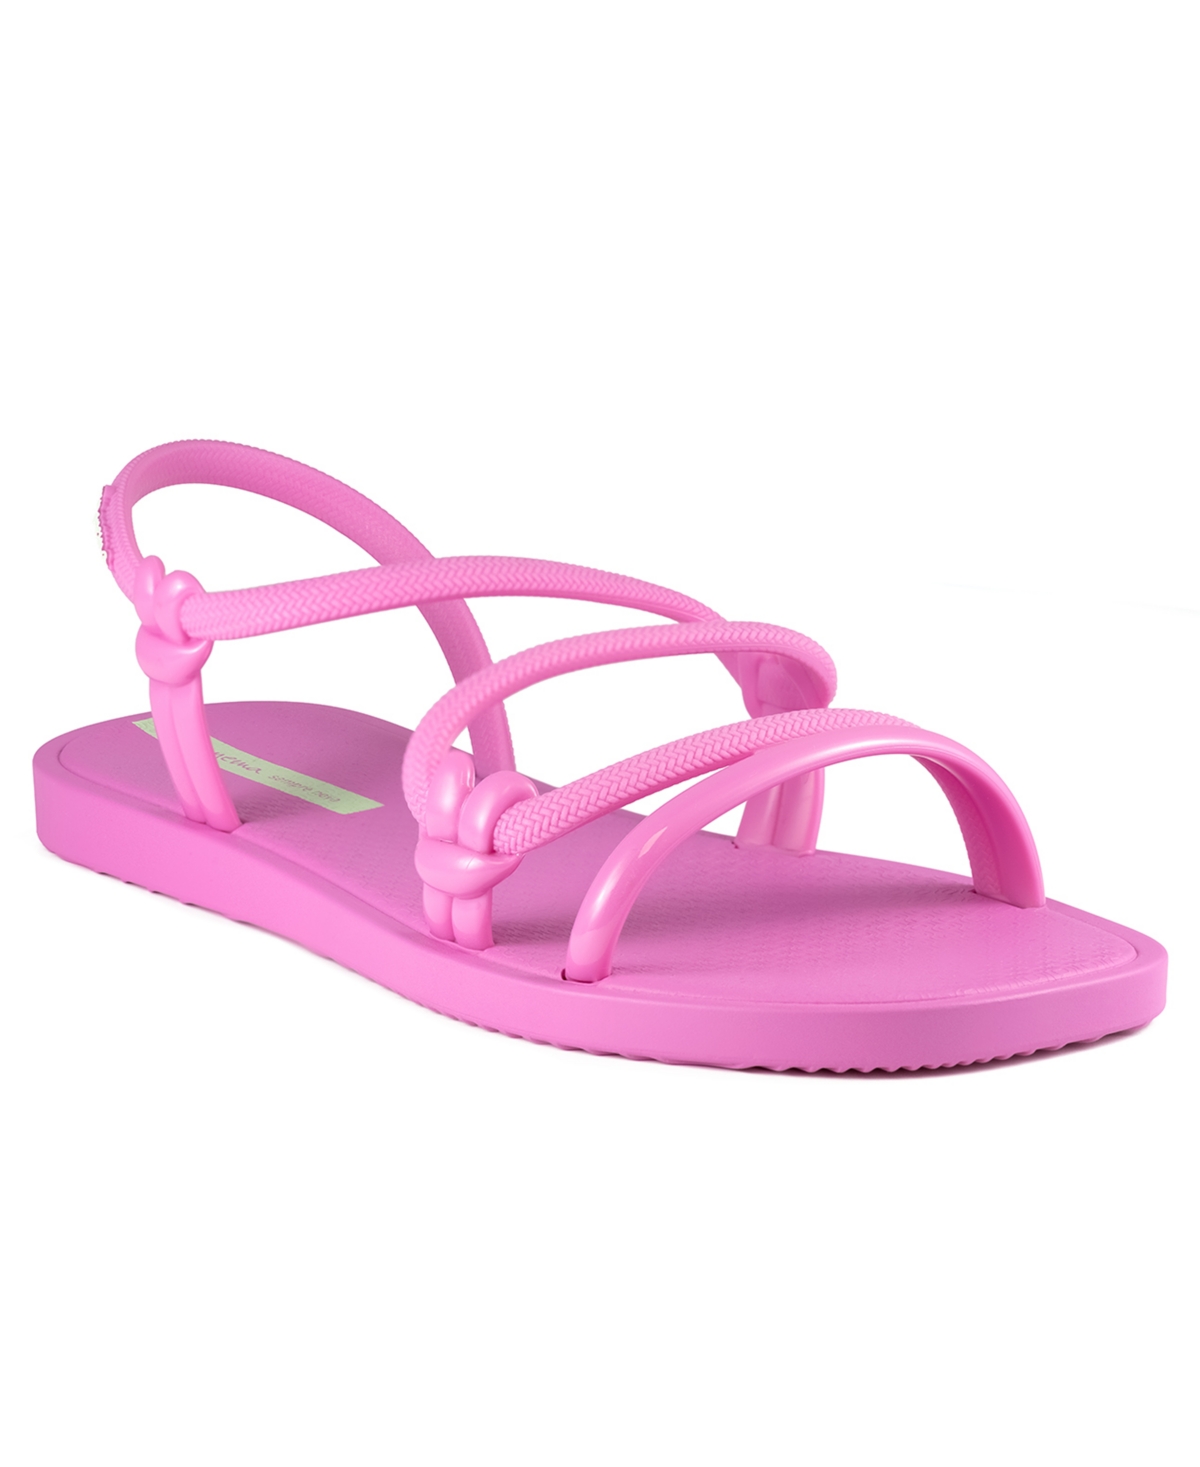 Women's Solar Comfort Flat Sandals - Pink, Pink